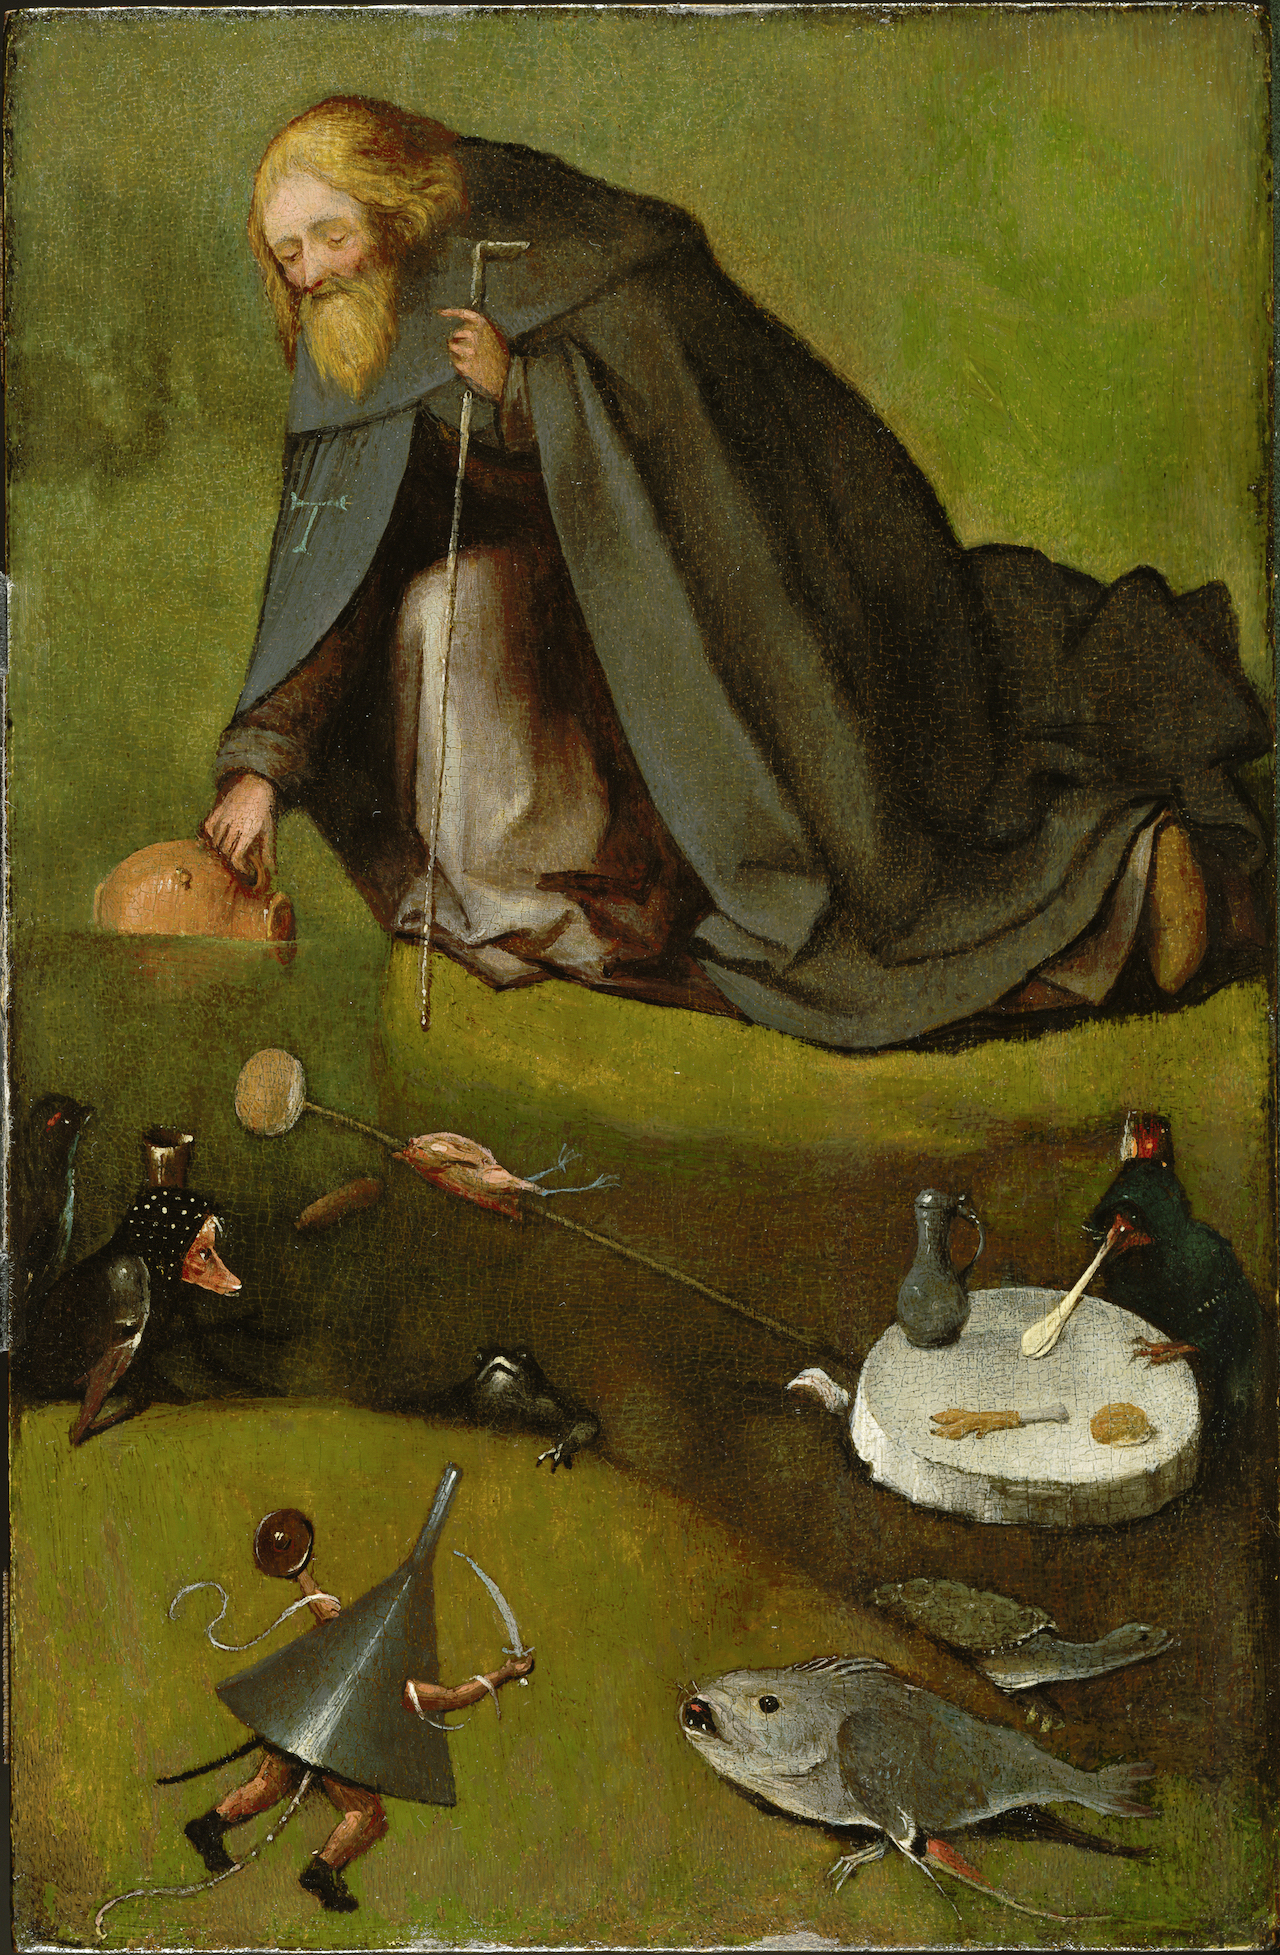 A Tentação do Santo António by Hieronymus Bosch - 1500-1510 - 38.58 × 25.4 cm 